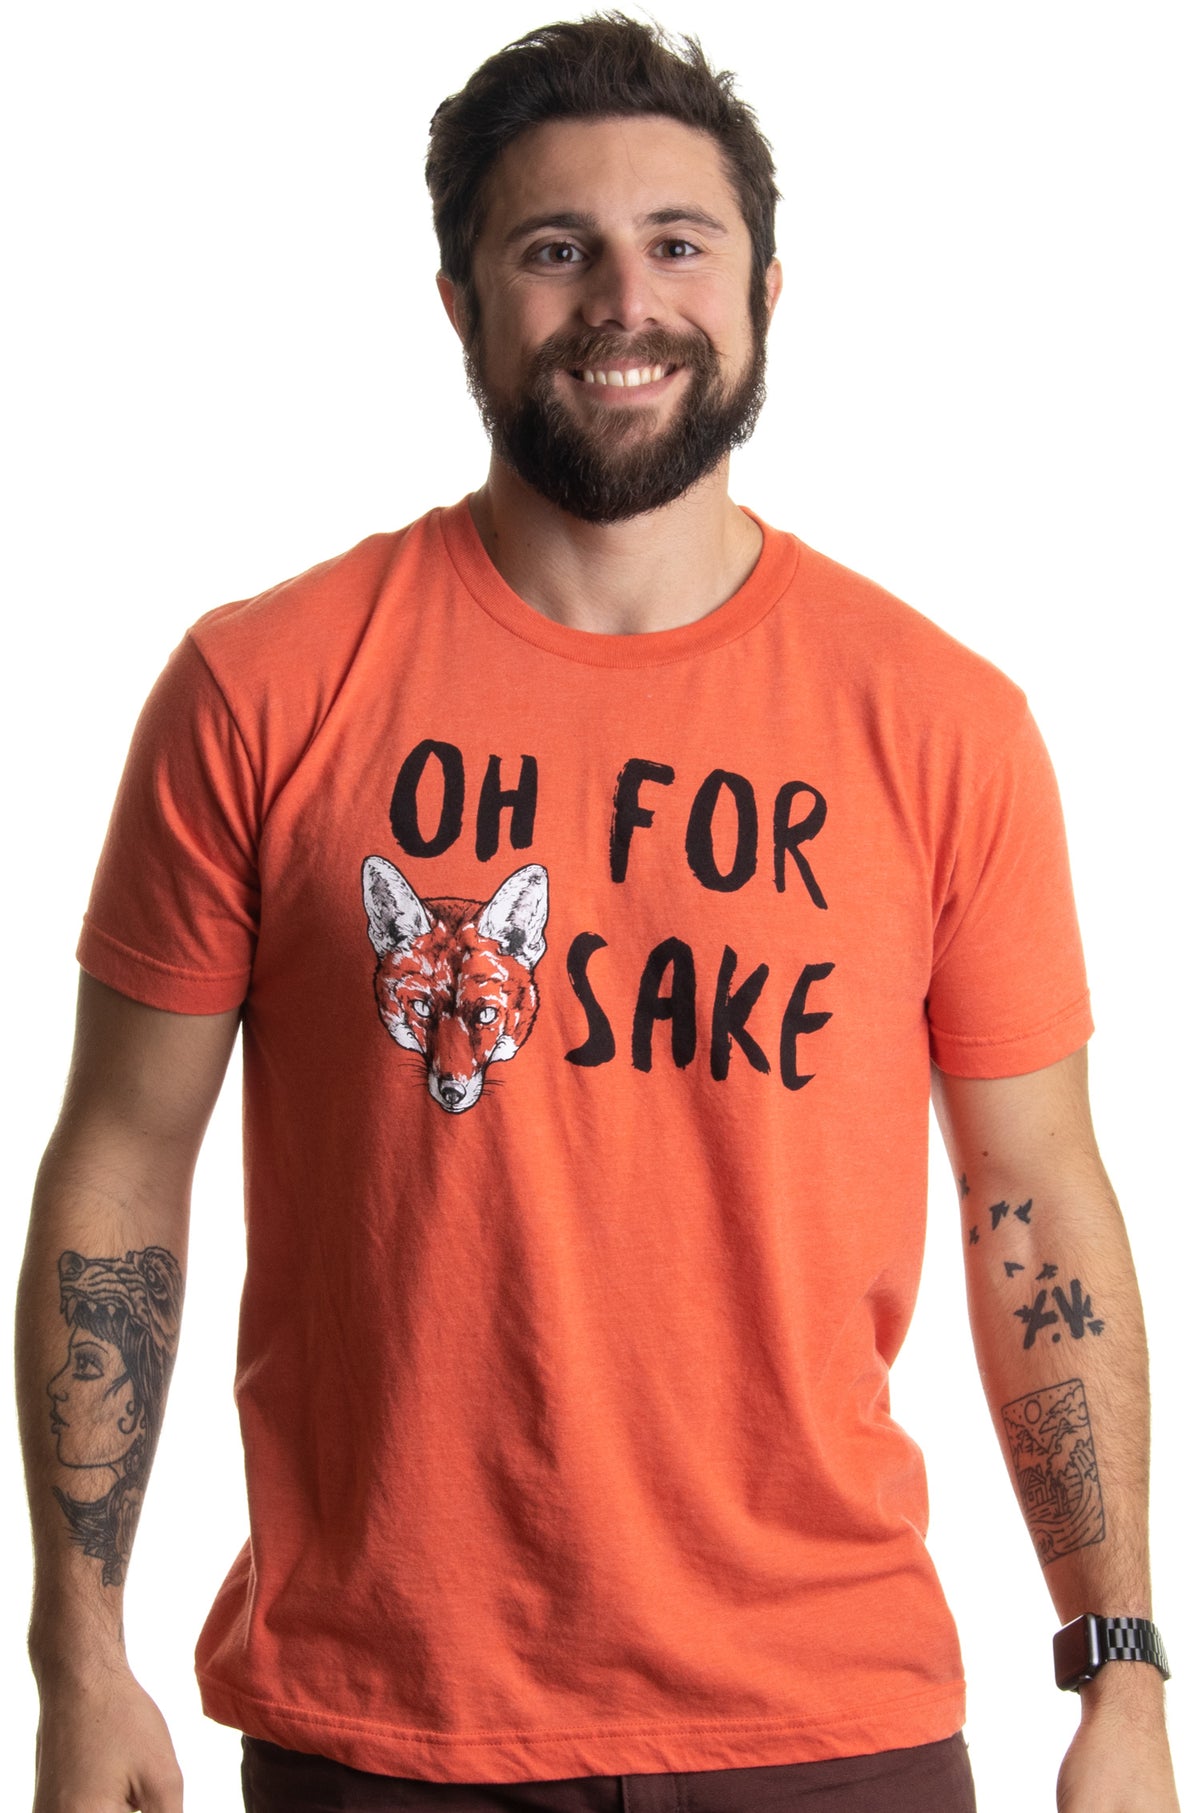 Oh for Fox Sake | Funny Saying Quote Humor Joke Pun Phrase for Men Women T-shirt